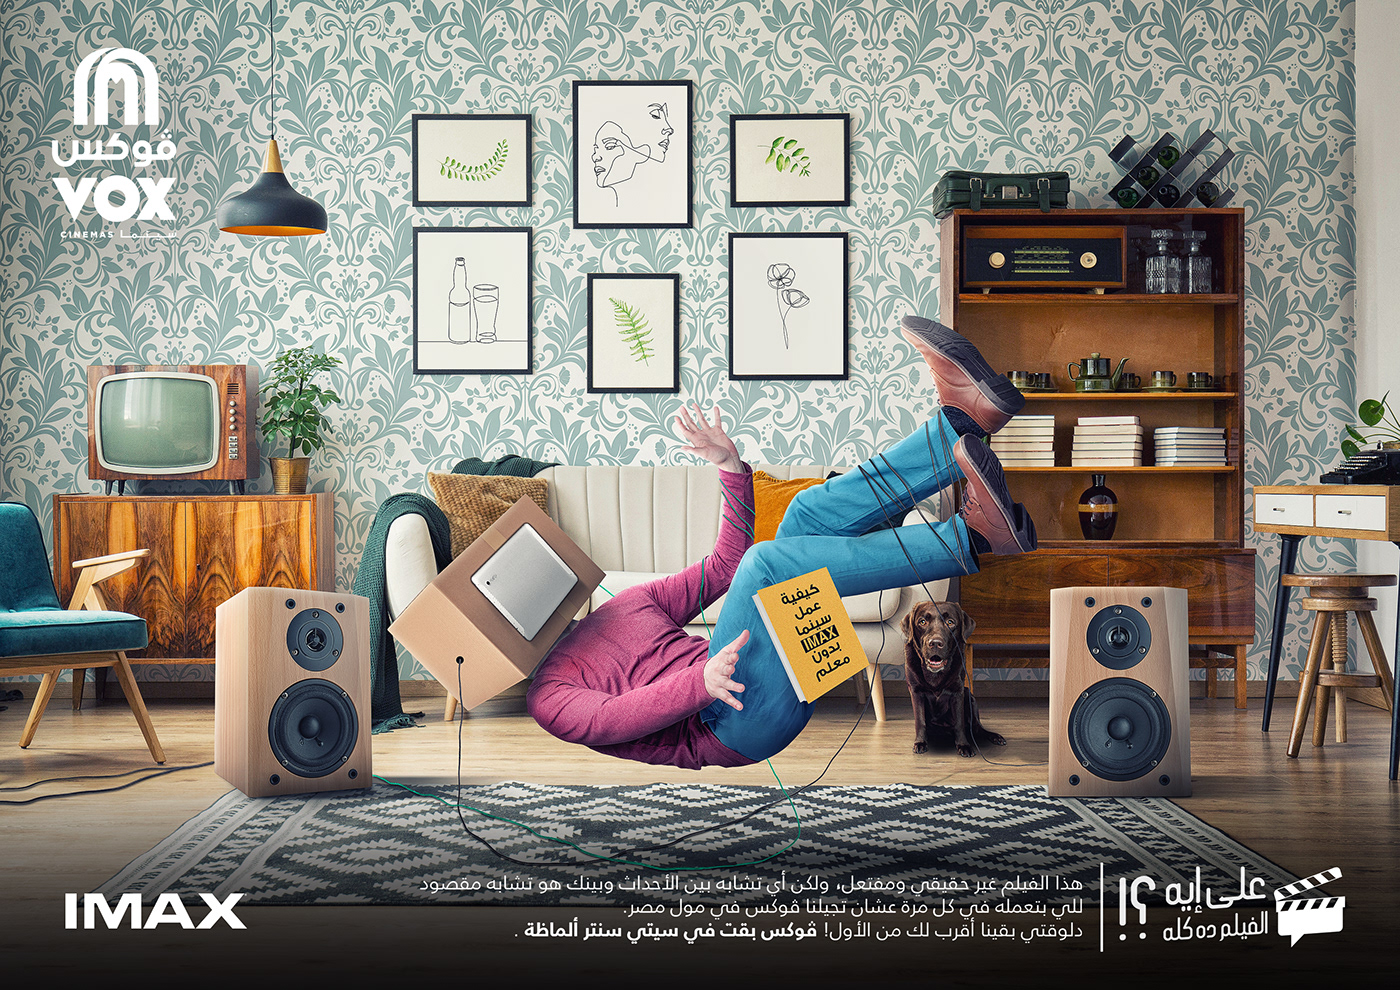 creative ads iMAX manipulation retouching  social media Spider Man Vox Cinemas  Cinema poster